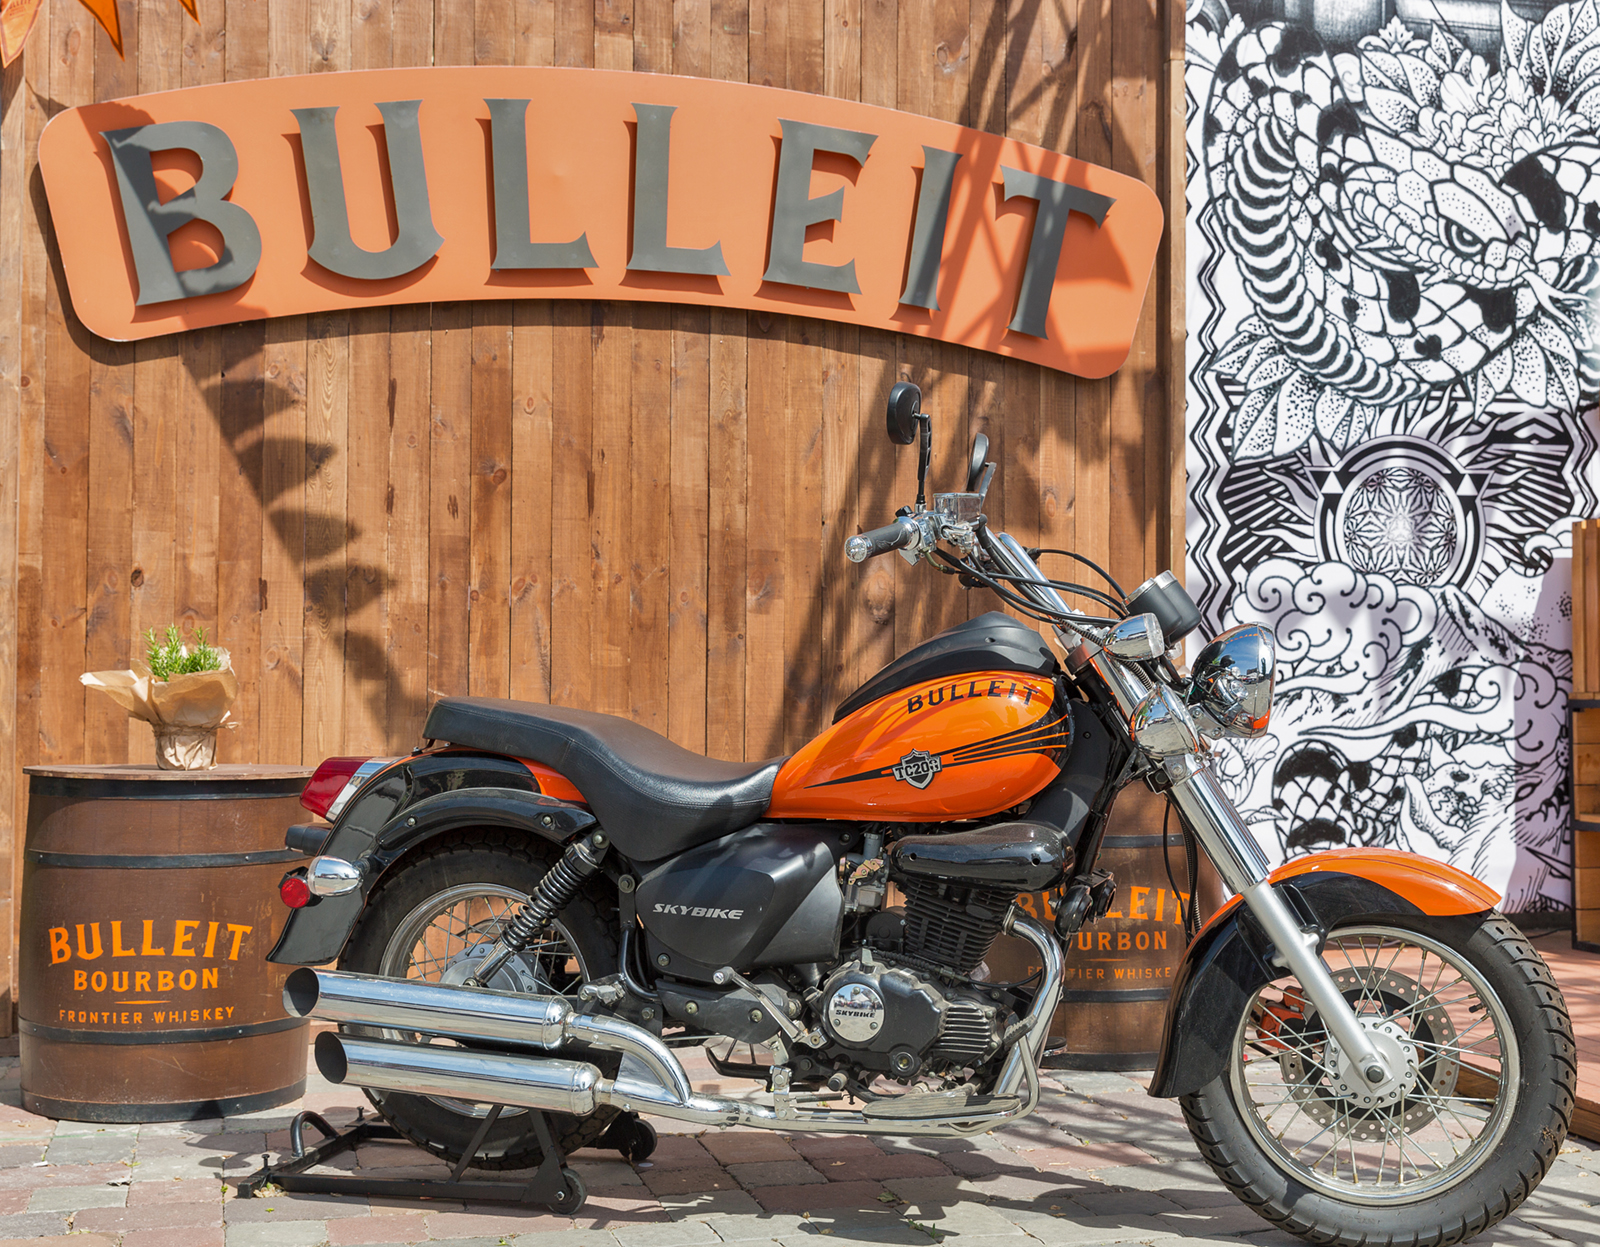 Motorcycle in front of Bulleit Bourbon distillery